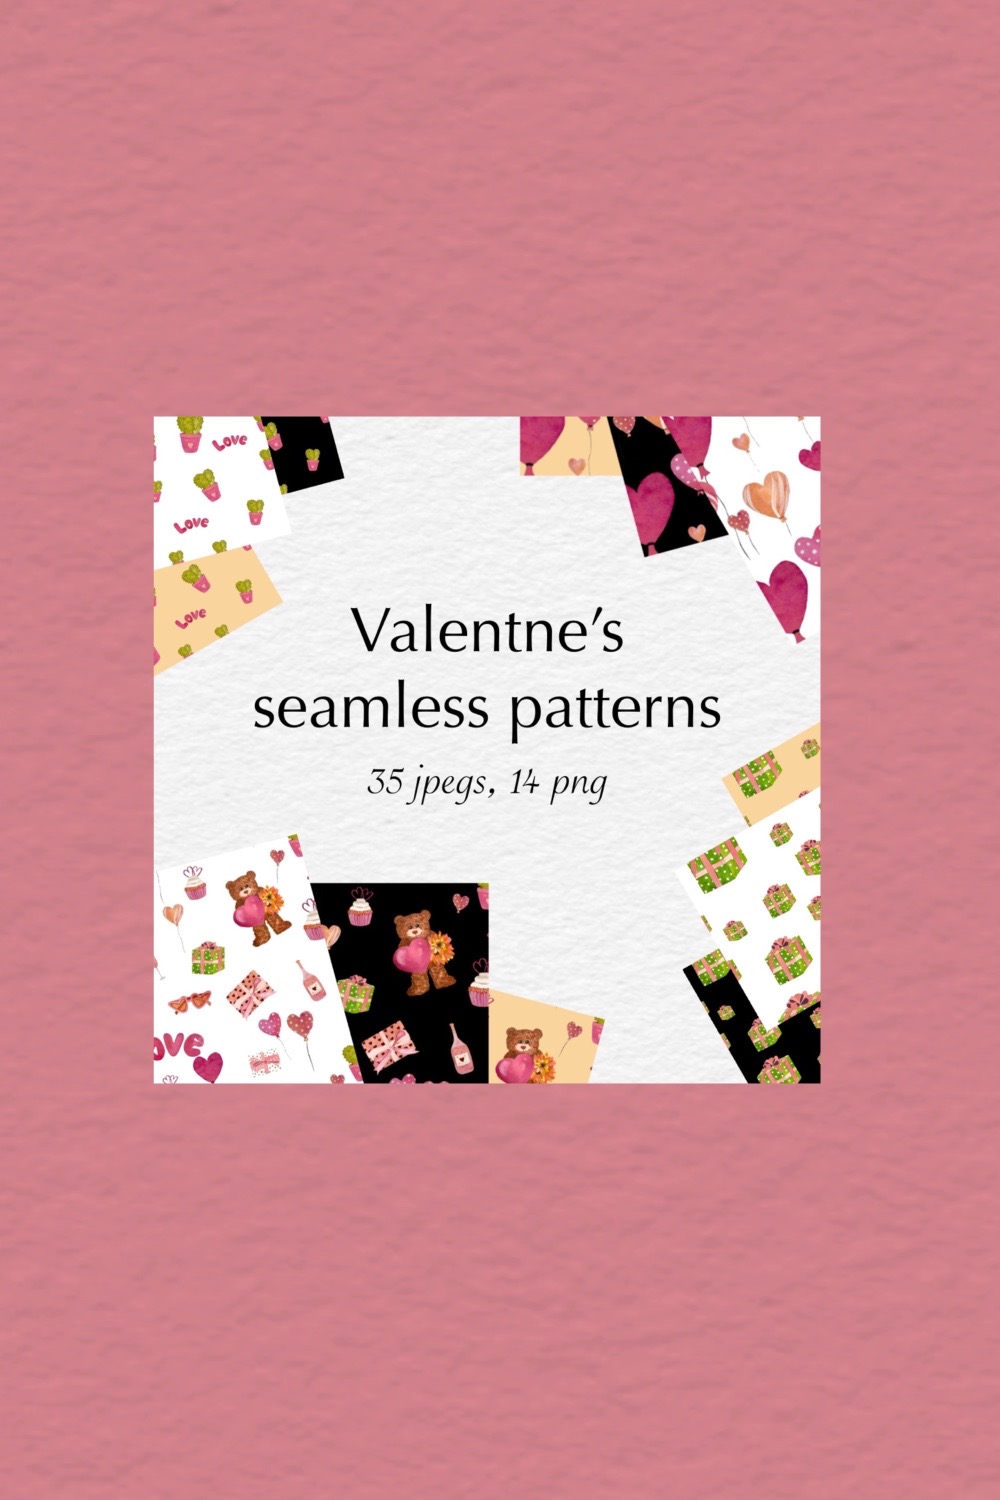 Valentine's Seamless Patterns Design pinterest image.